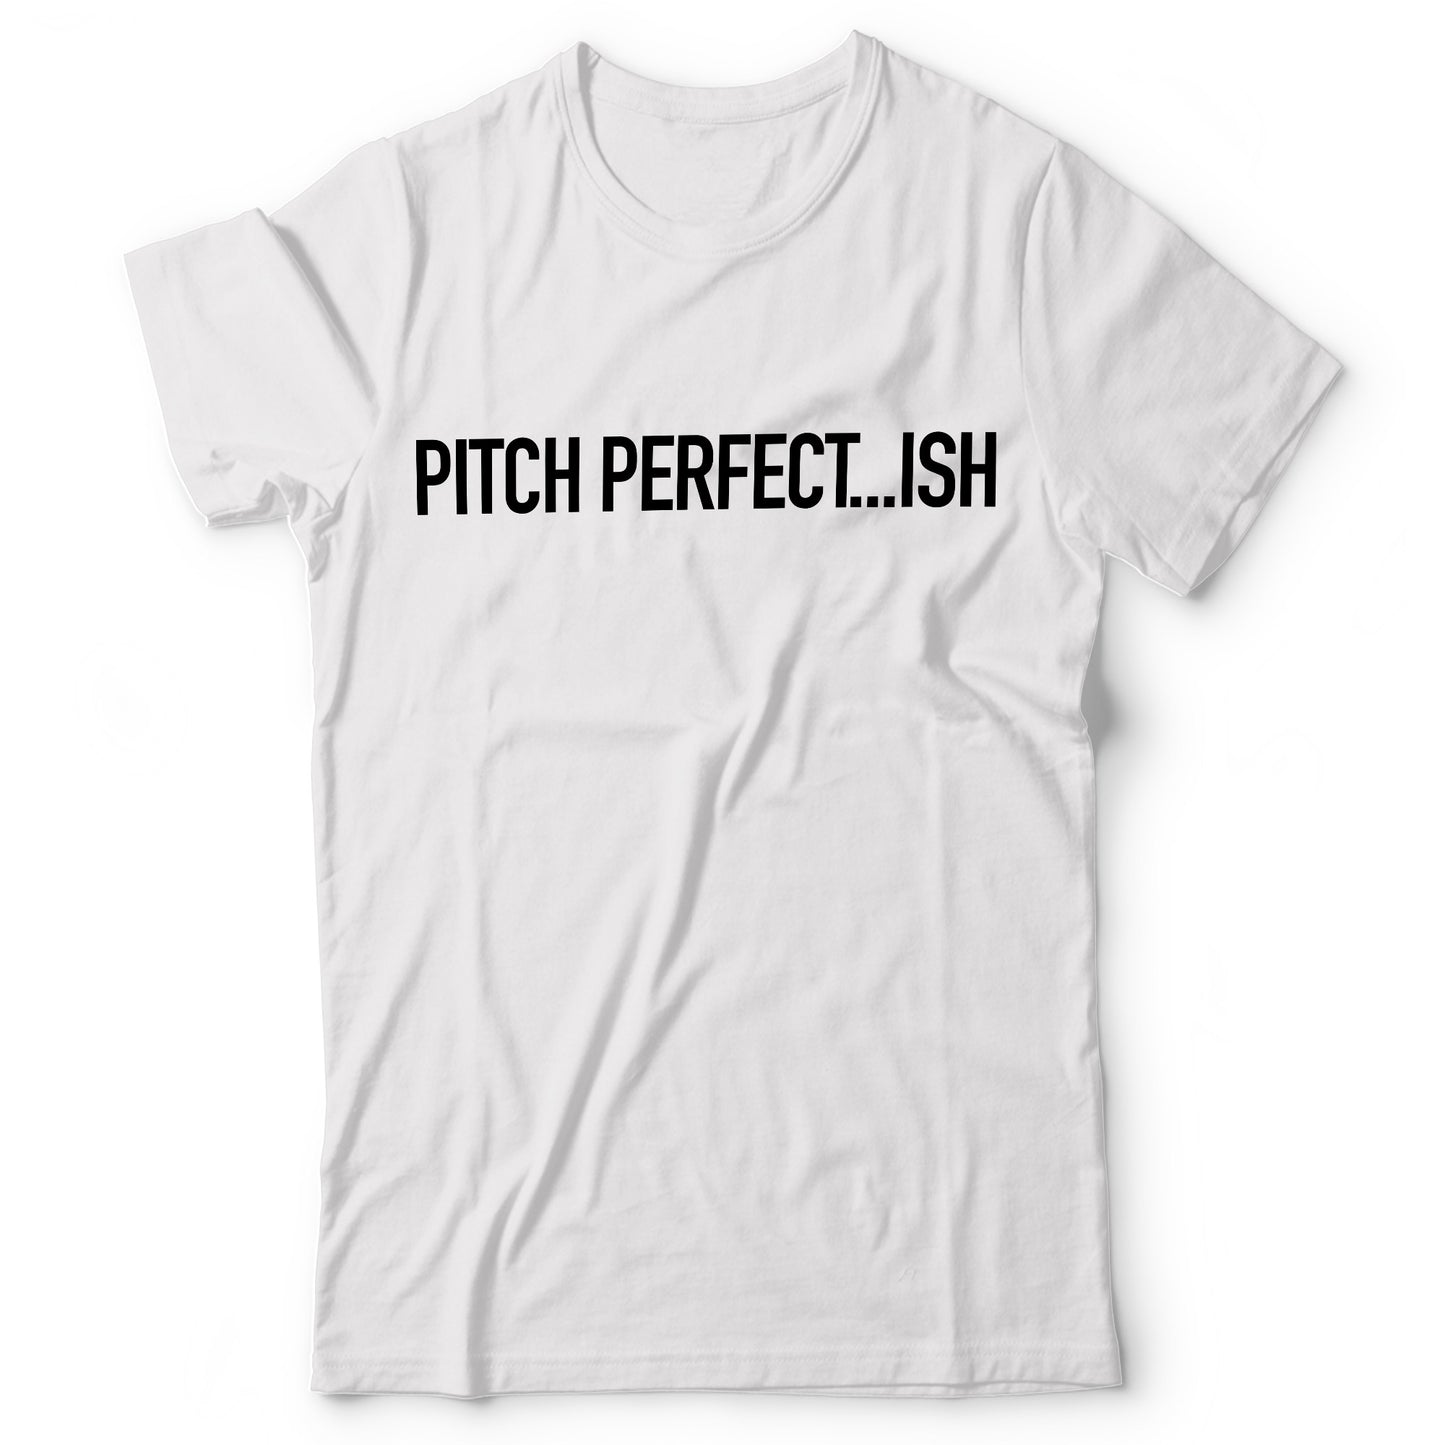 Pitch Perfect...ish - T-shirt